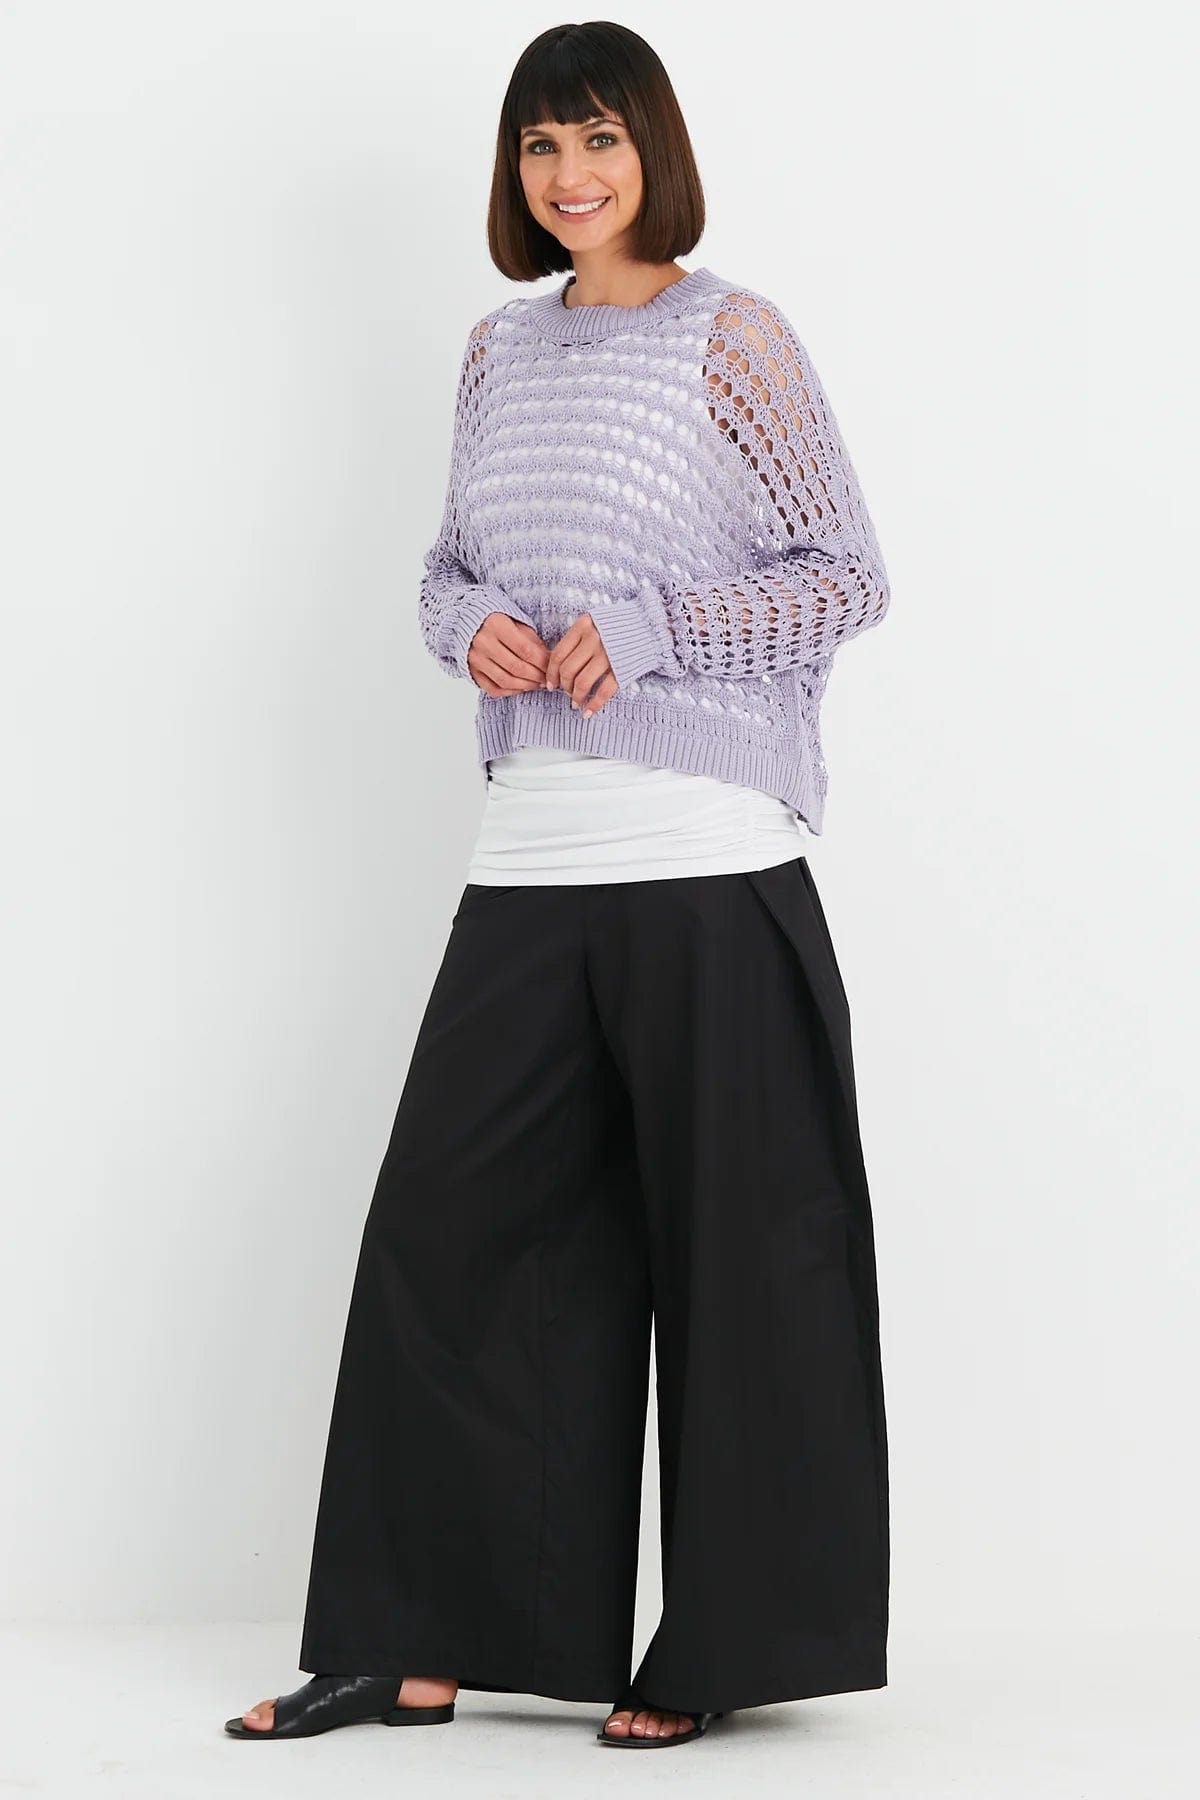 PLANET by Lauren G Women's Sweaters Lavender / OS Planet Mini Crochet